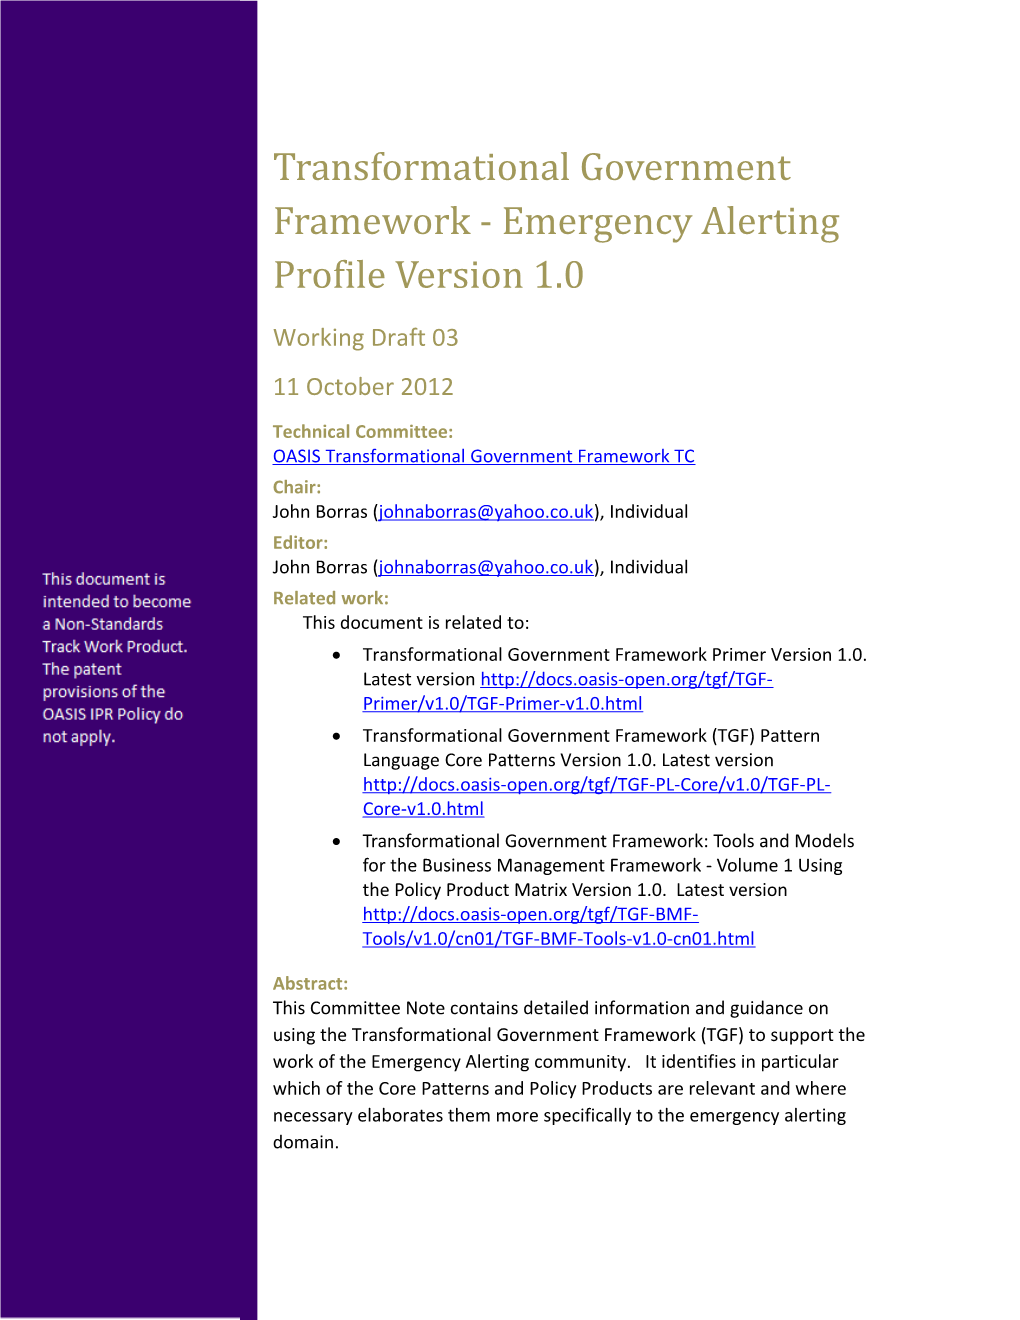 Transformational Government Framework Emergency Alerting Profile Version 1.0